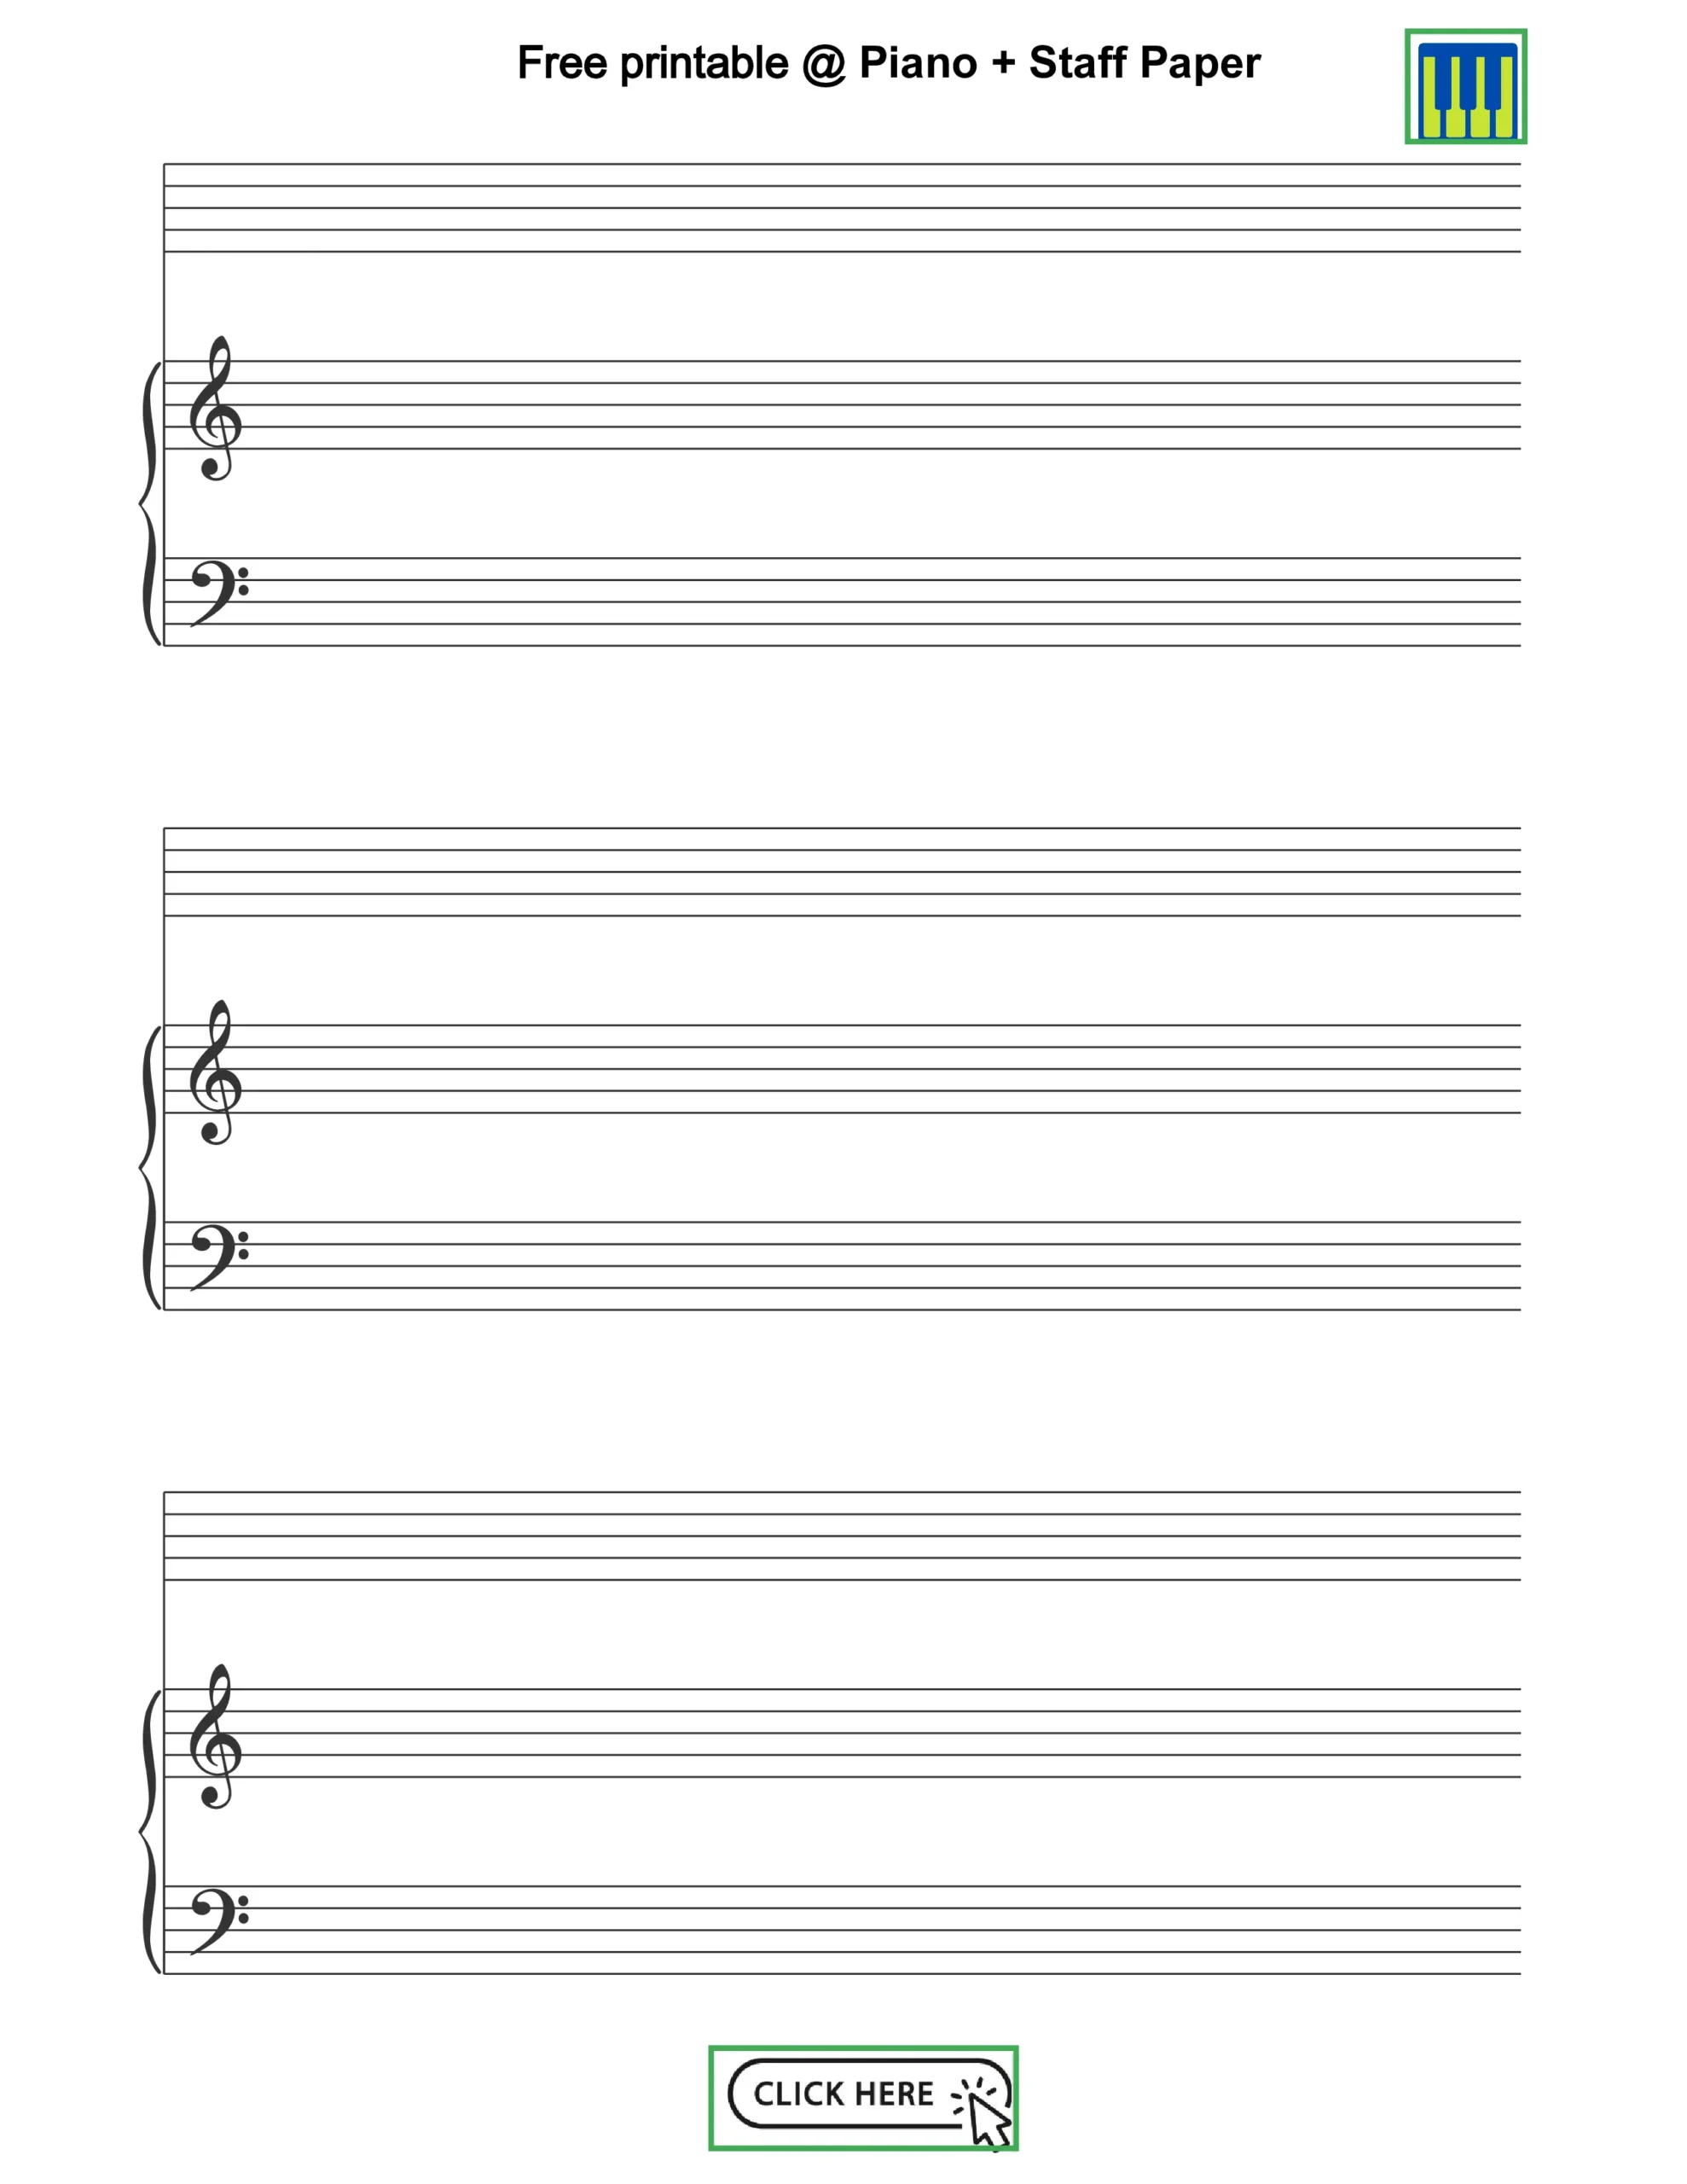 Free printableBlank Sheet Music Piano Plus Staff Paper Templates